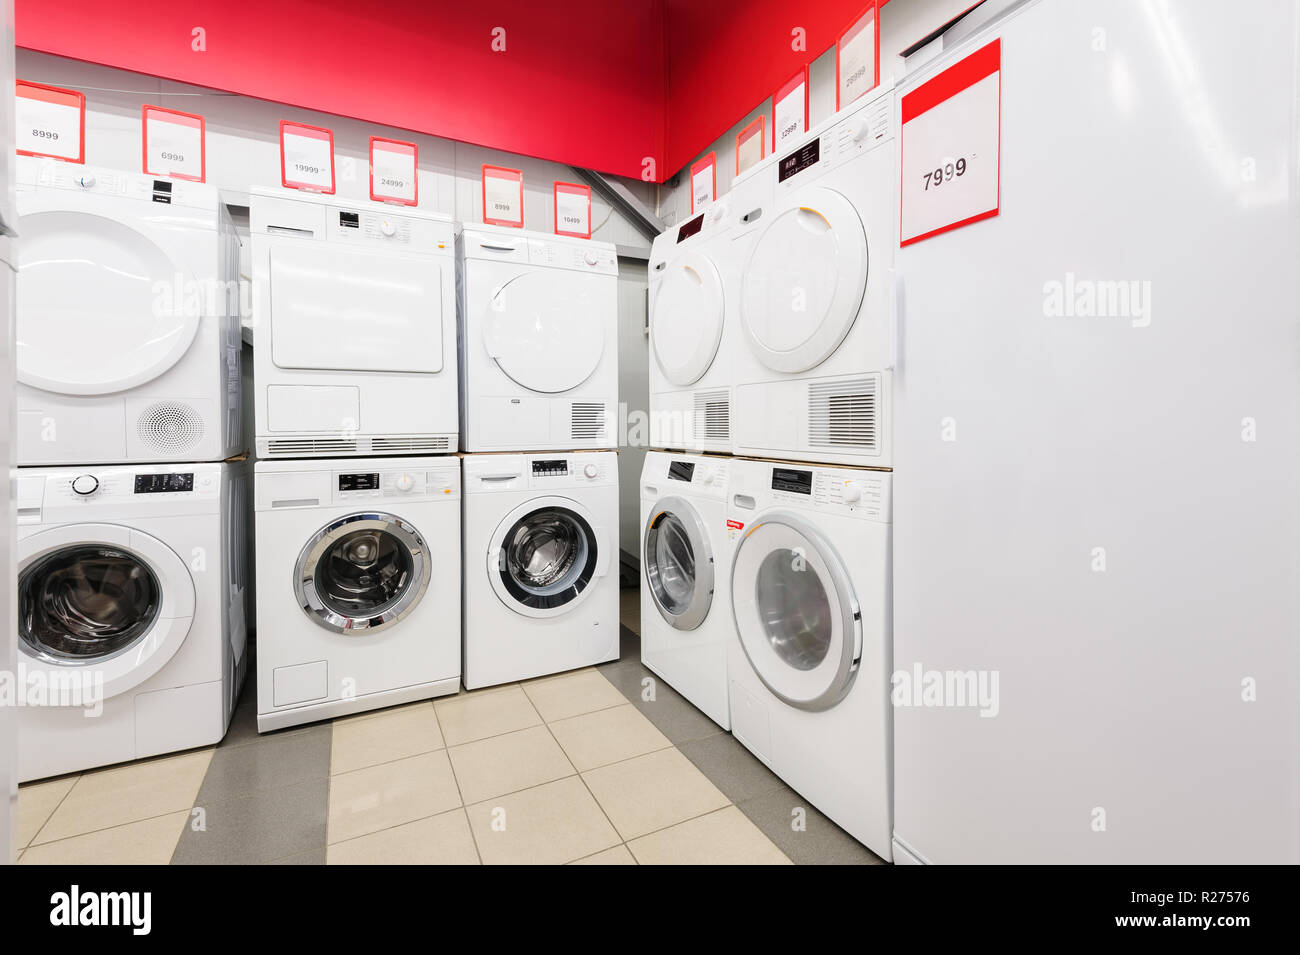 washing mashines in appliance store Stock Photo